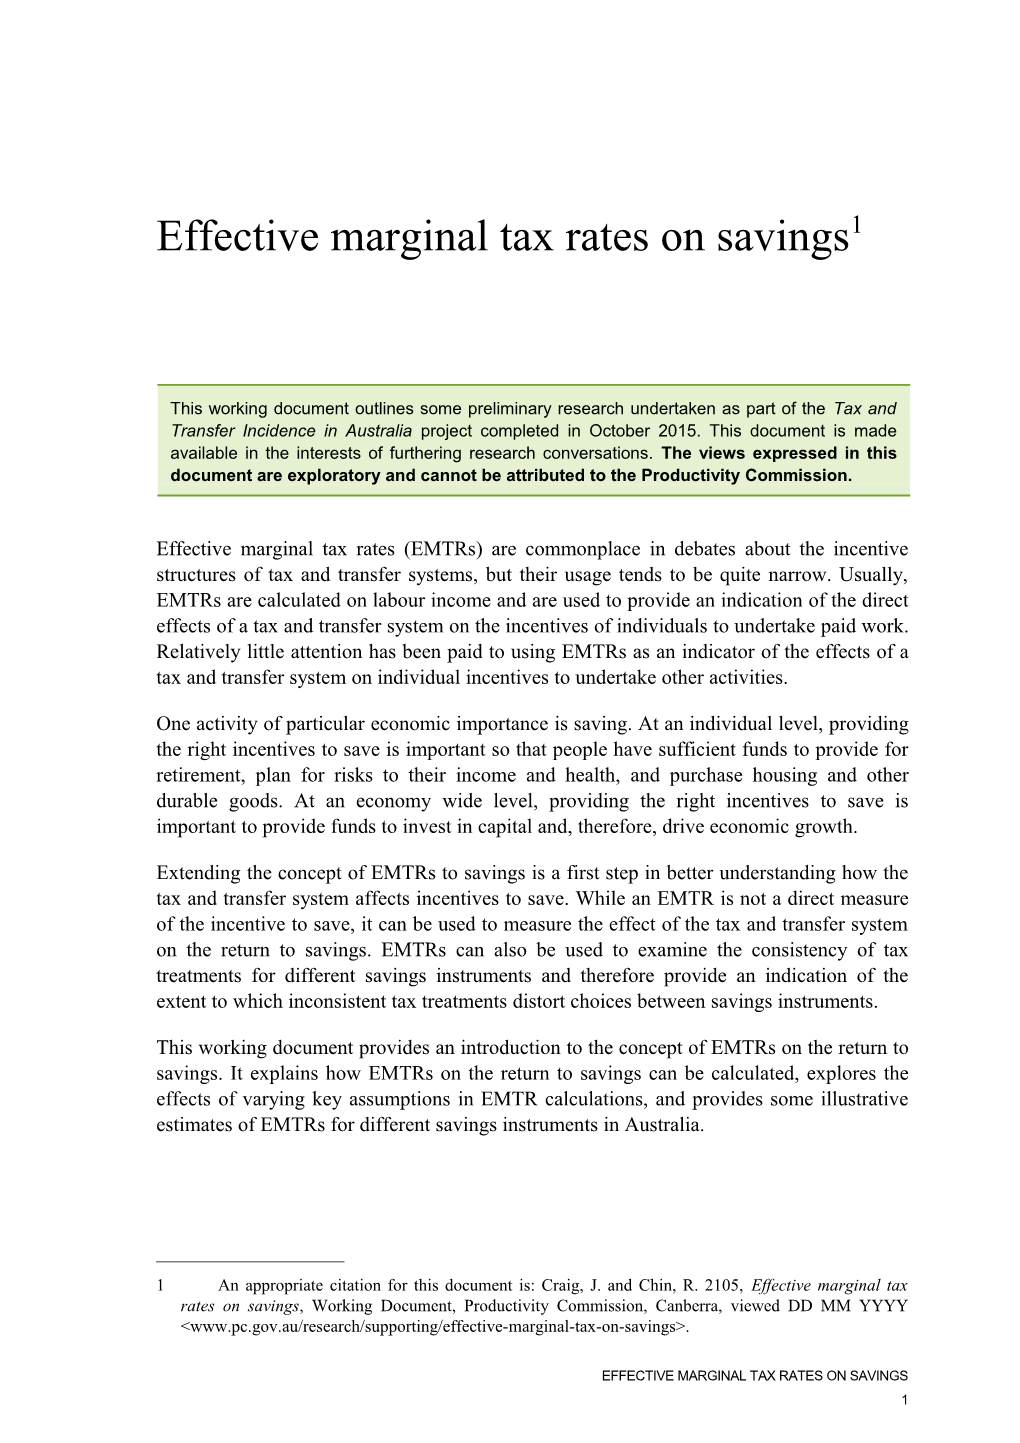 Effective Marginal Tax Rates on Savings